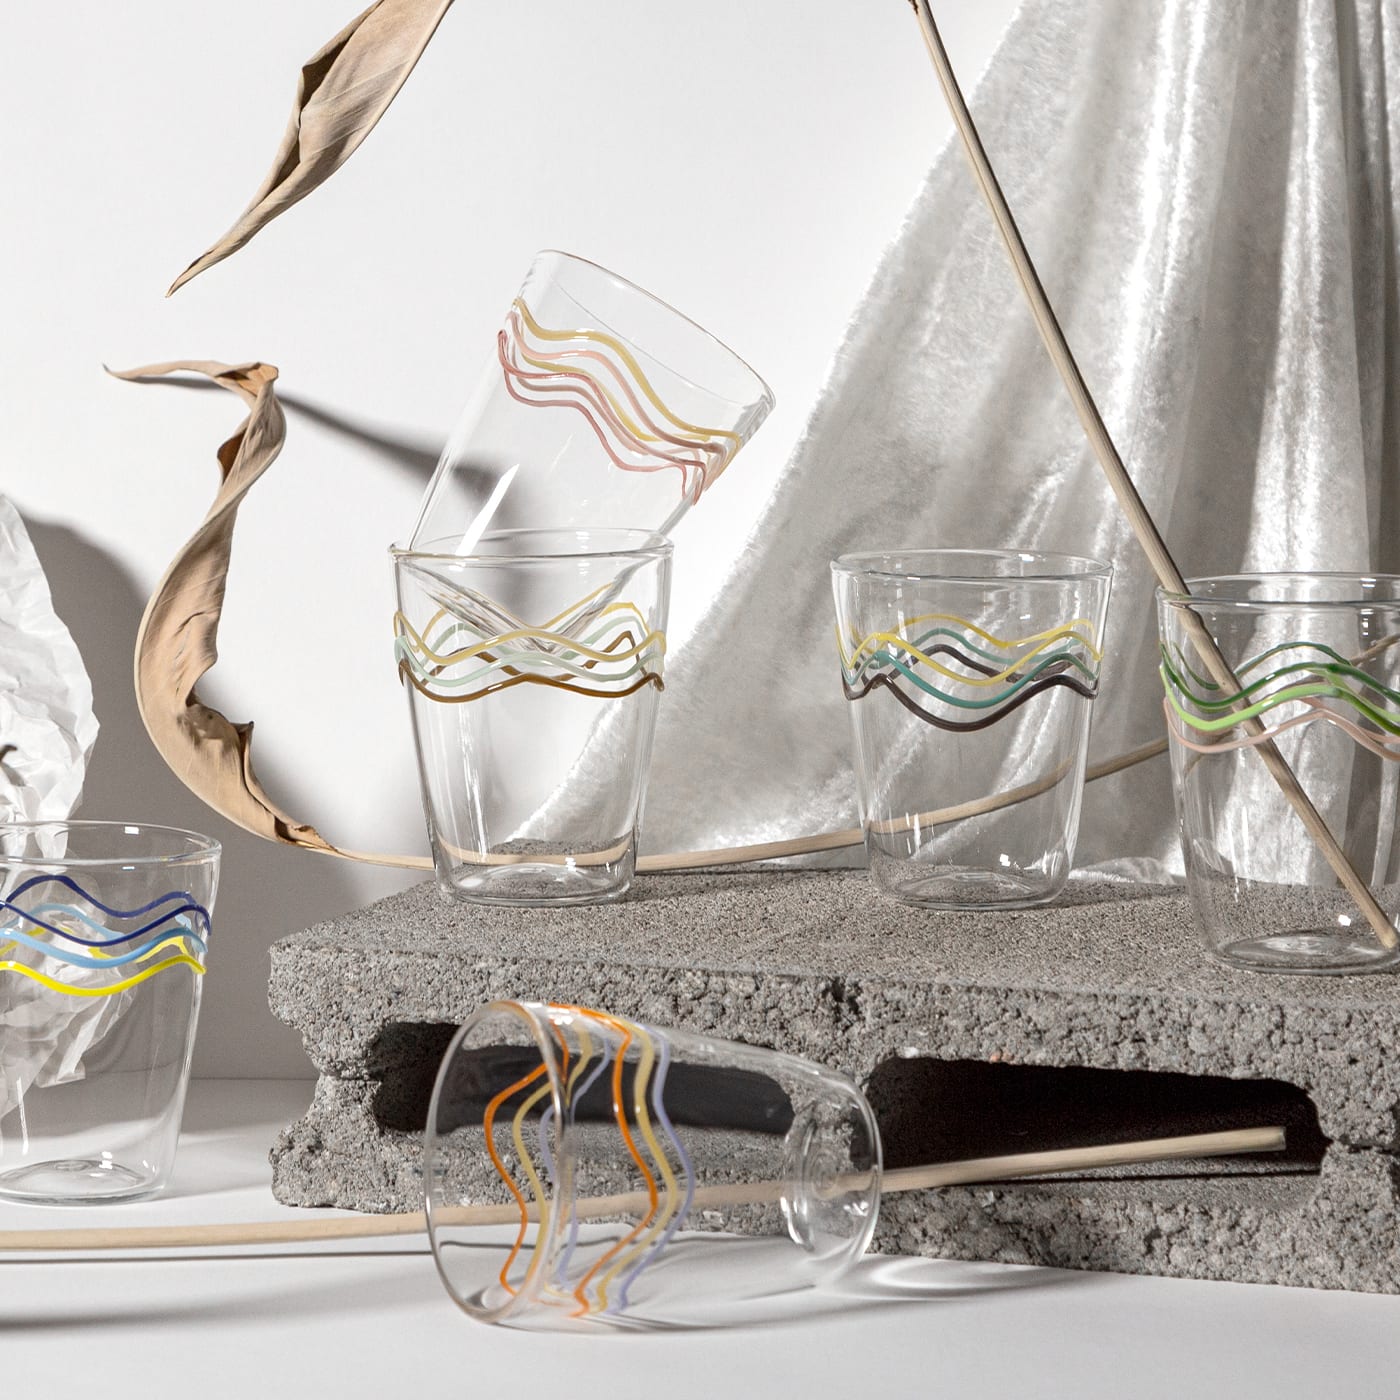 CABINET DE CURIOSITES SET OF 6 WATER GLASSES #1 - Grand Tour by Vito Nesta